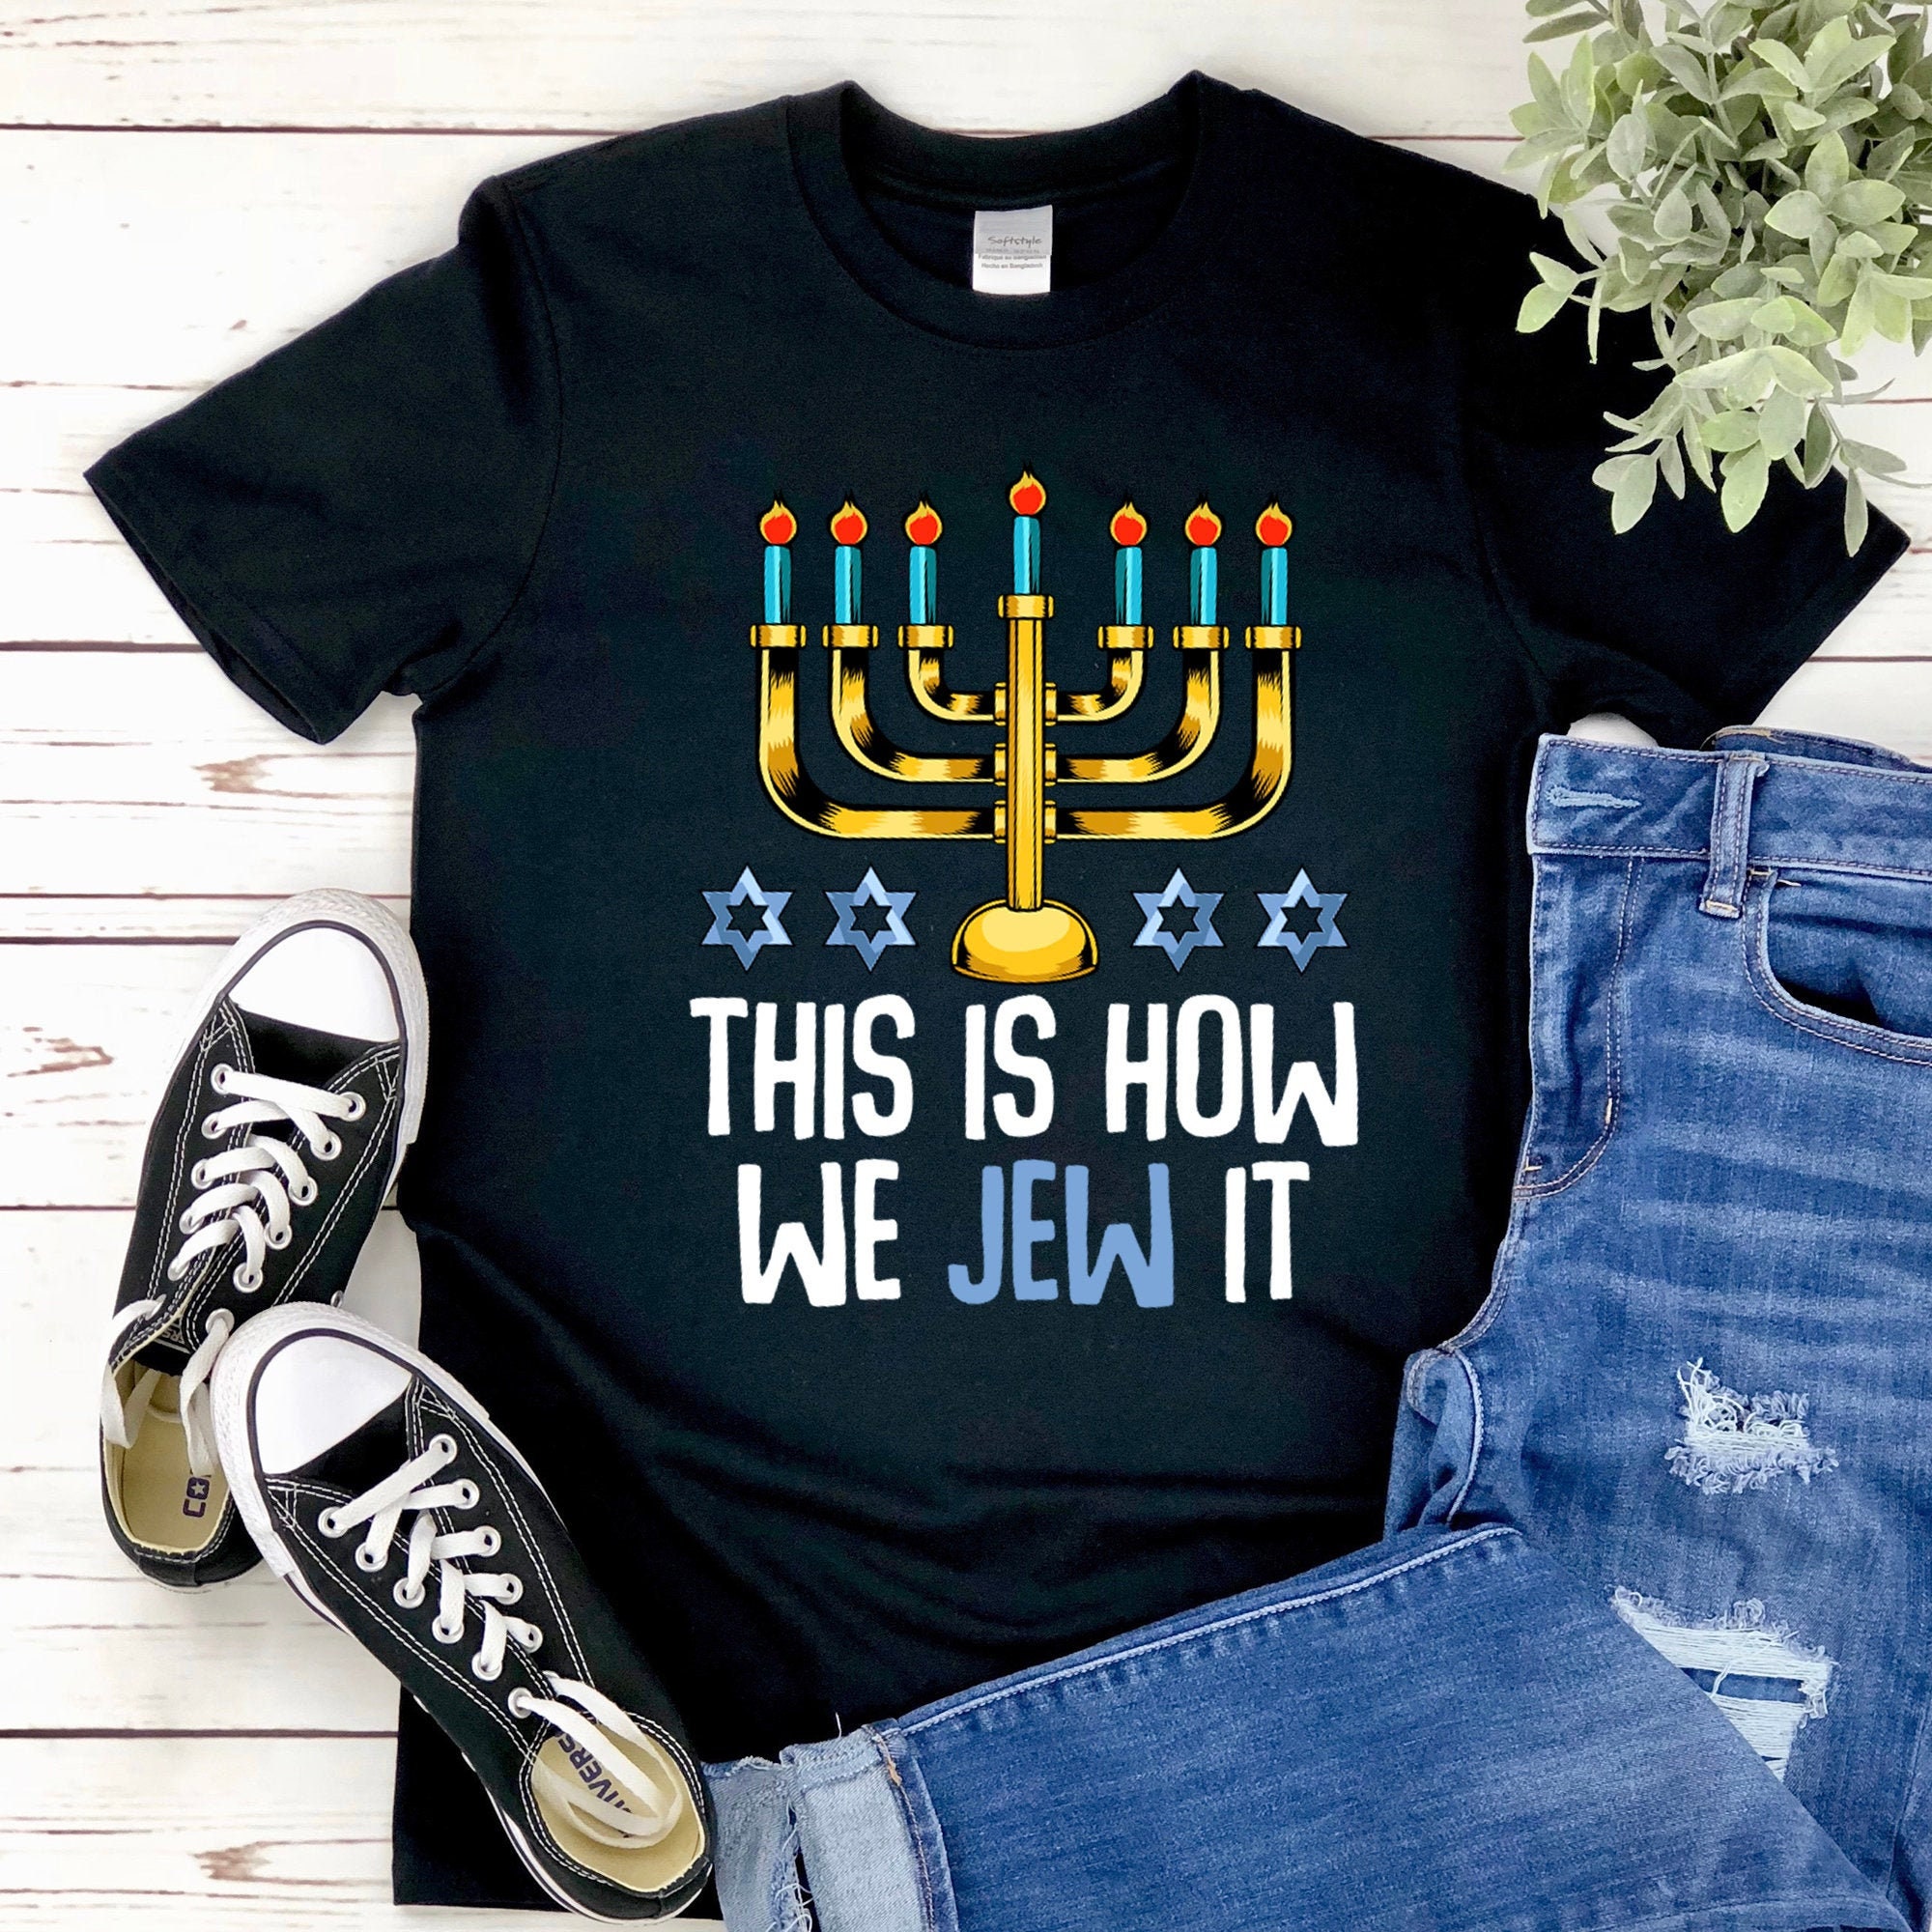 This is How we Jew It / Hanukkah Shirts / Sweater / Funny Jewish Shabbat Sweatshirt / T-shirt/ Chanukah Menorah Holiday Candle Lighting